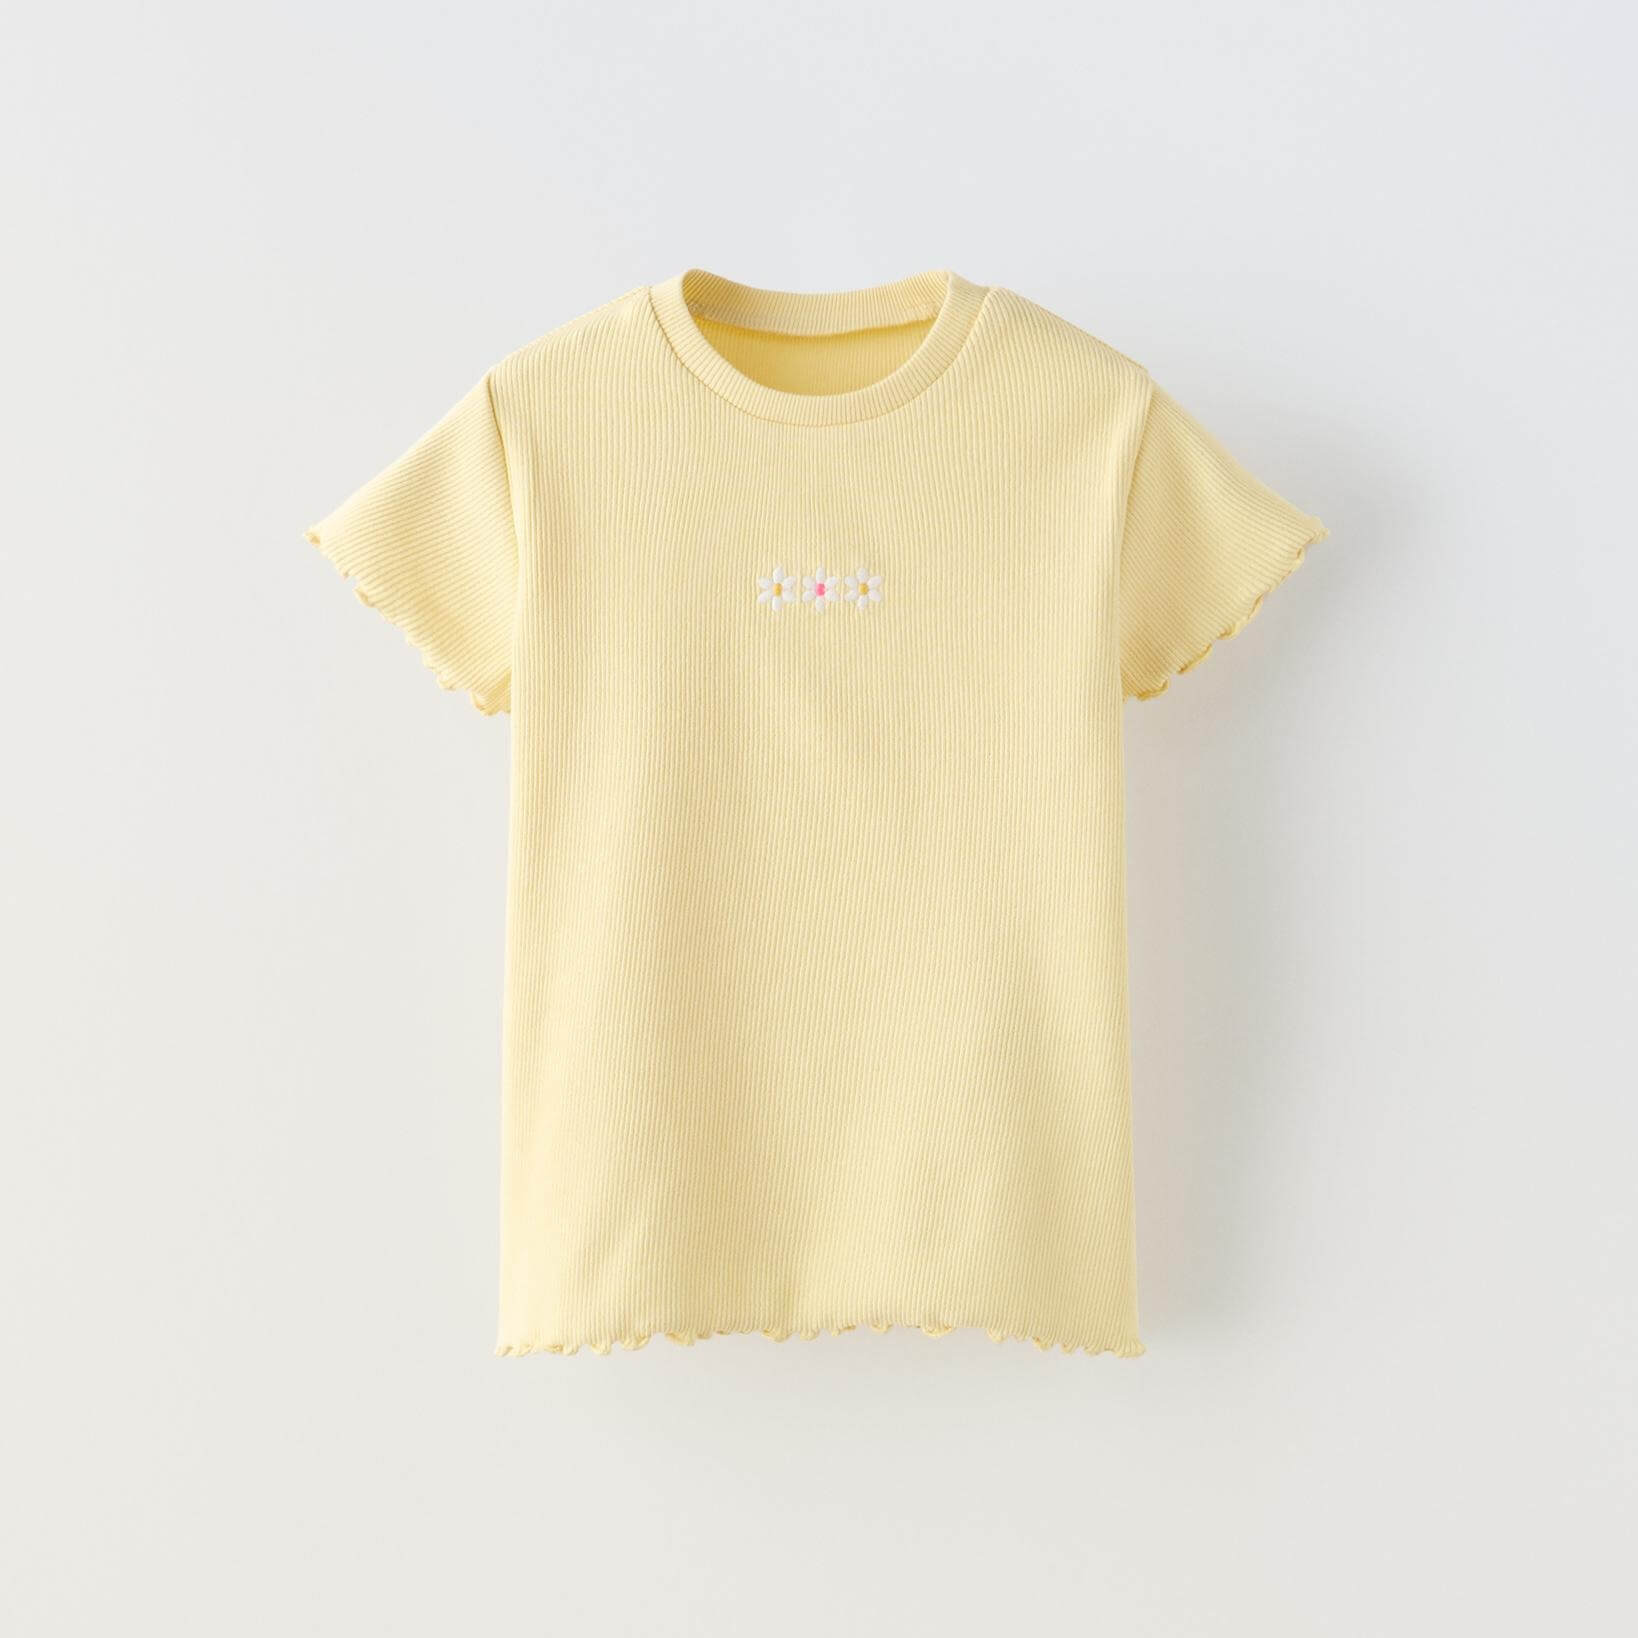 Футболка Zara Summer Camp Ribbed Embroidery, желтый толстовка худи zara ribbed желтый